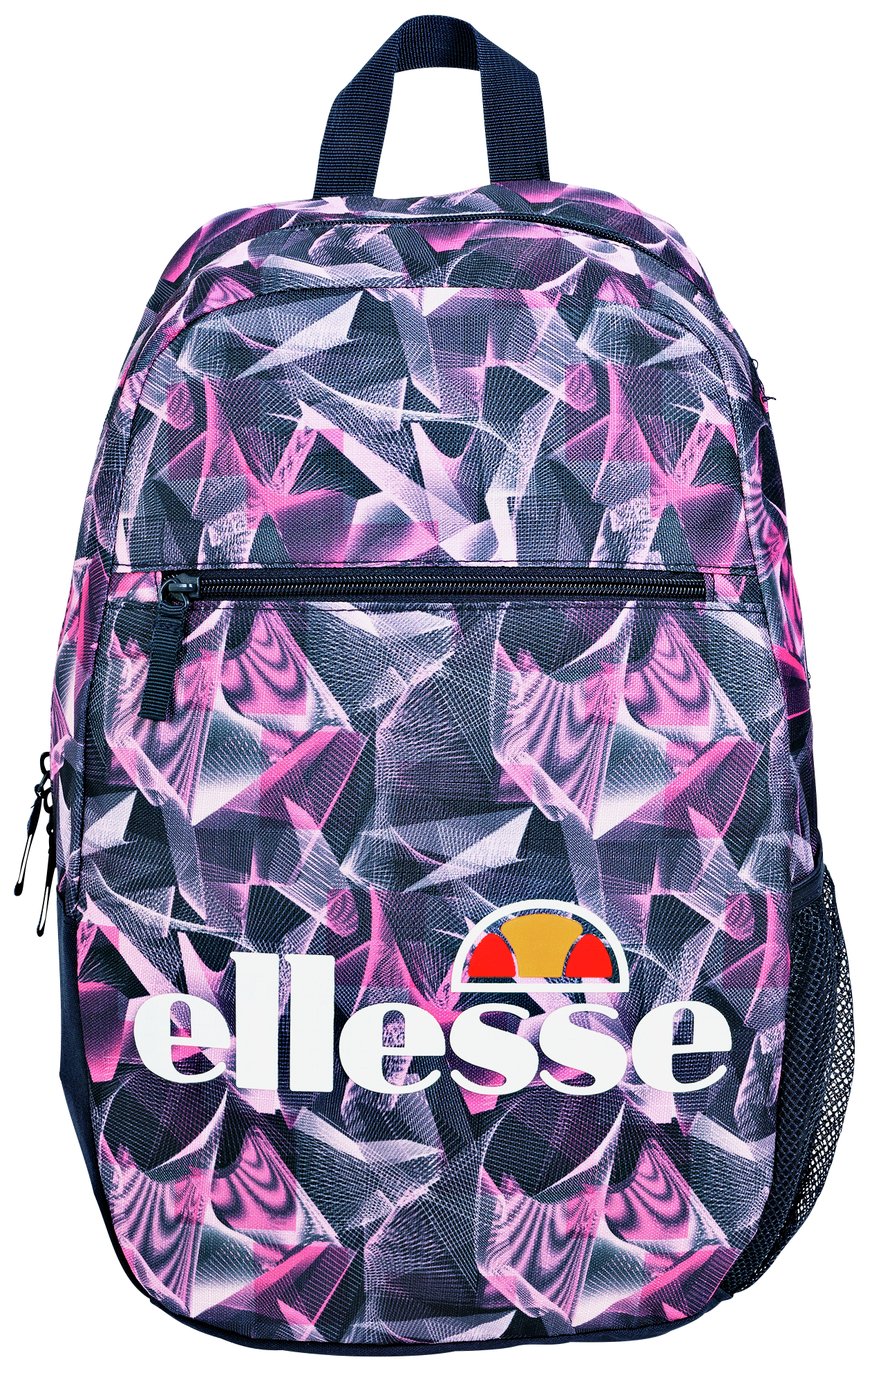 Ellesse Grafico Backpack Reviews